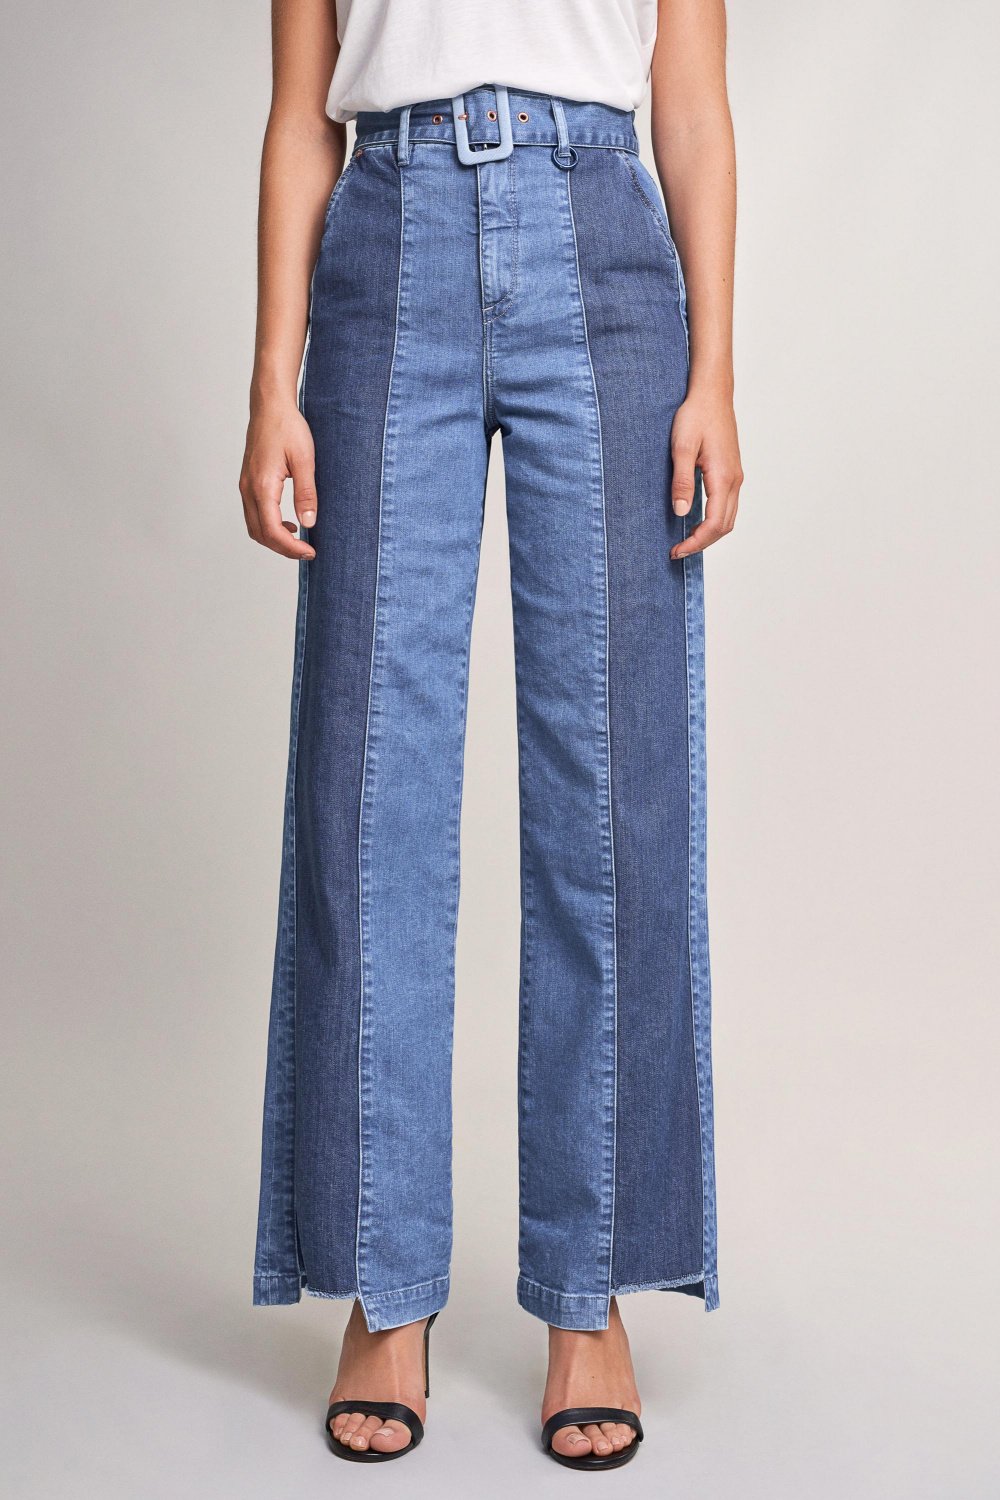 pantaloons high waist jeans